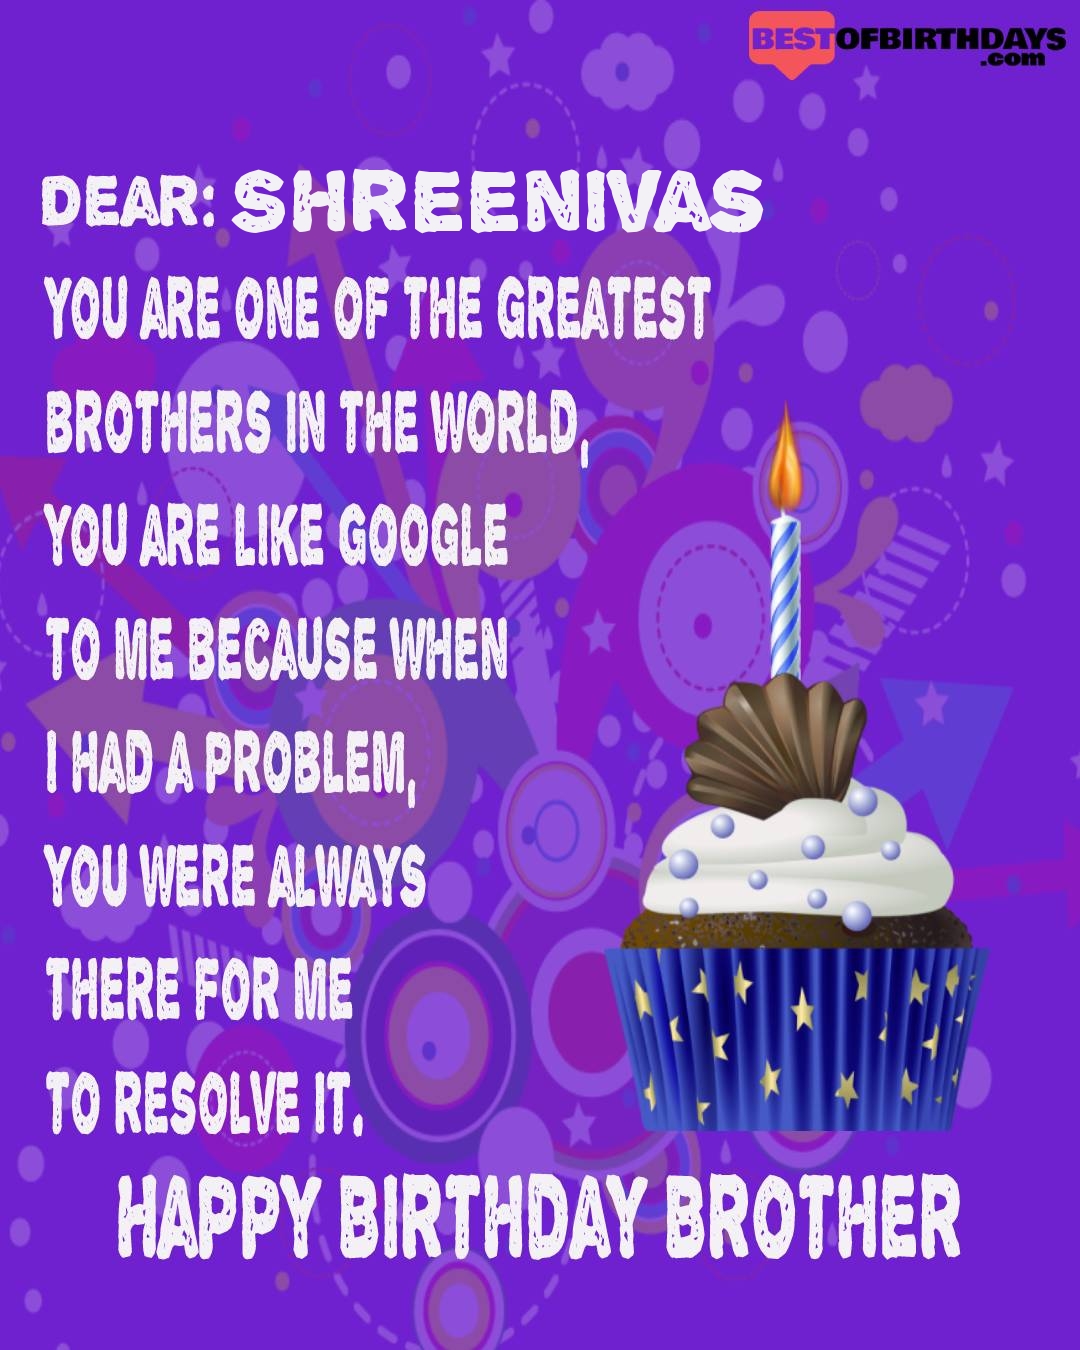 Happy birthday shreenivas bhai brother bro